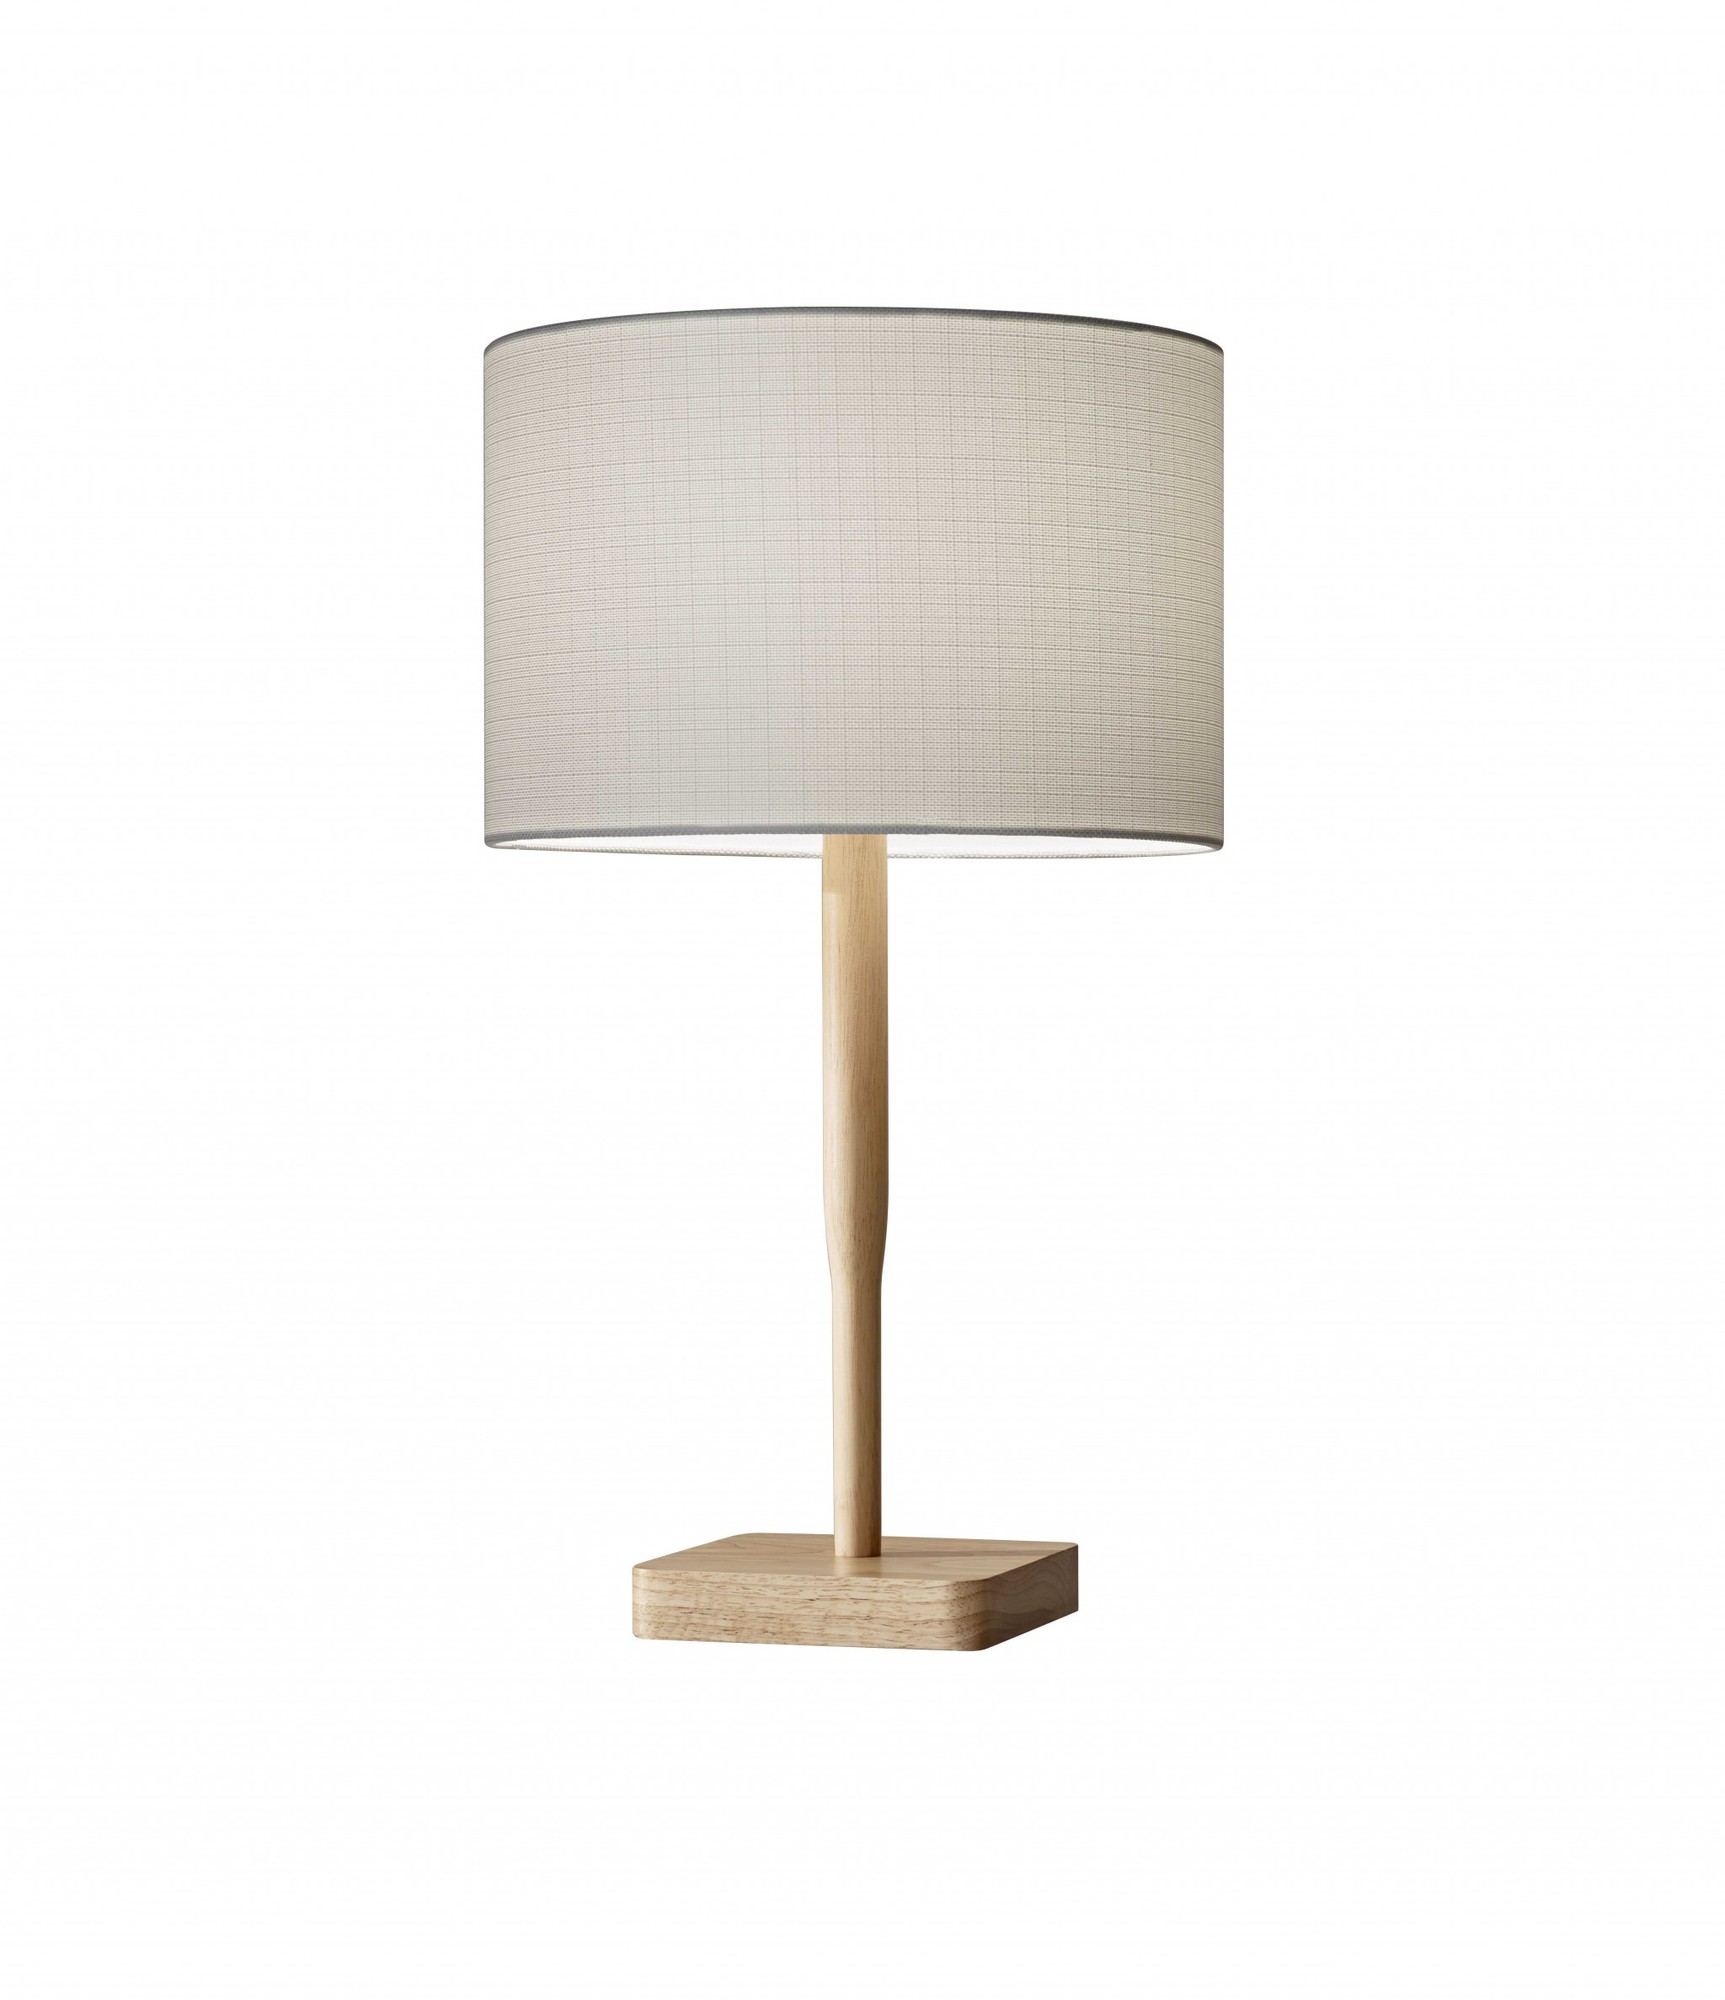 8" X 8" X 21" Natural Wood Table Lamp